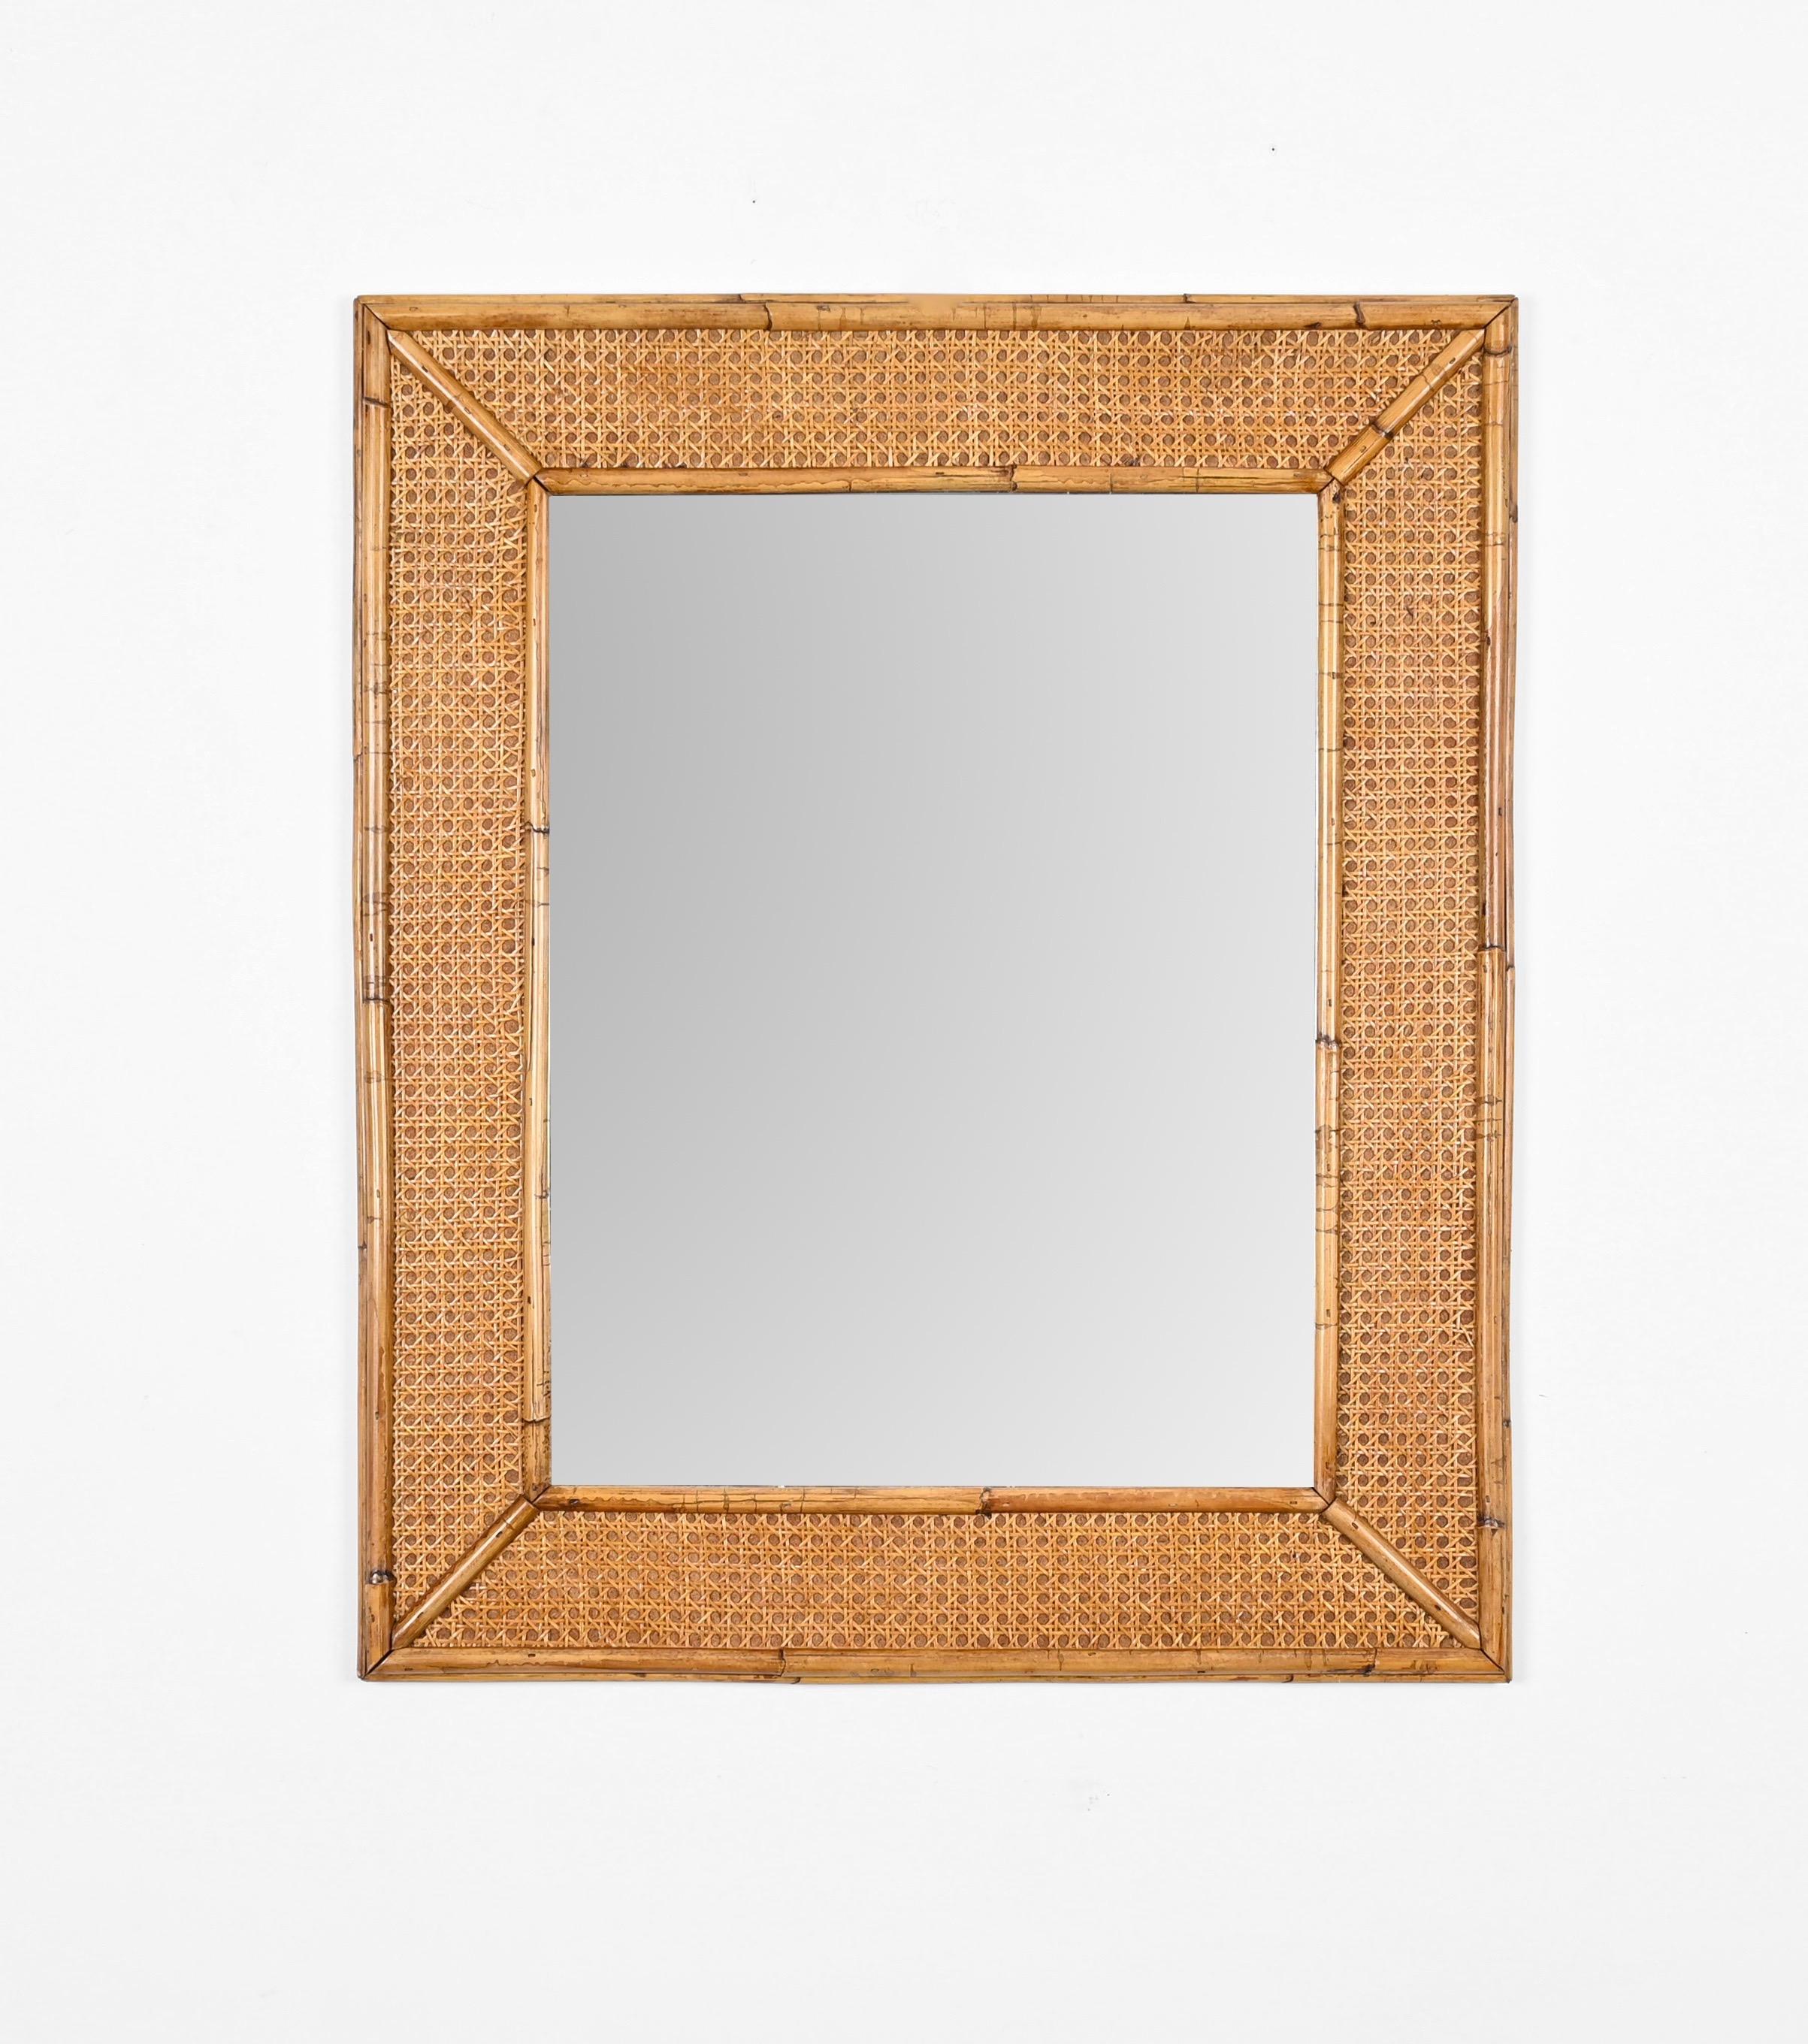 Midcentury Bamboo and Hand-Woven Wicker Rectangular Italian Mirror, 1970s For Sale 1